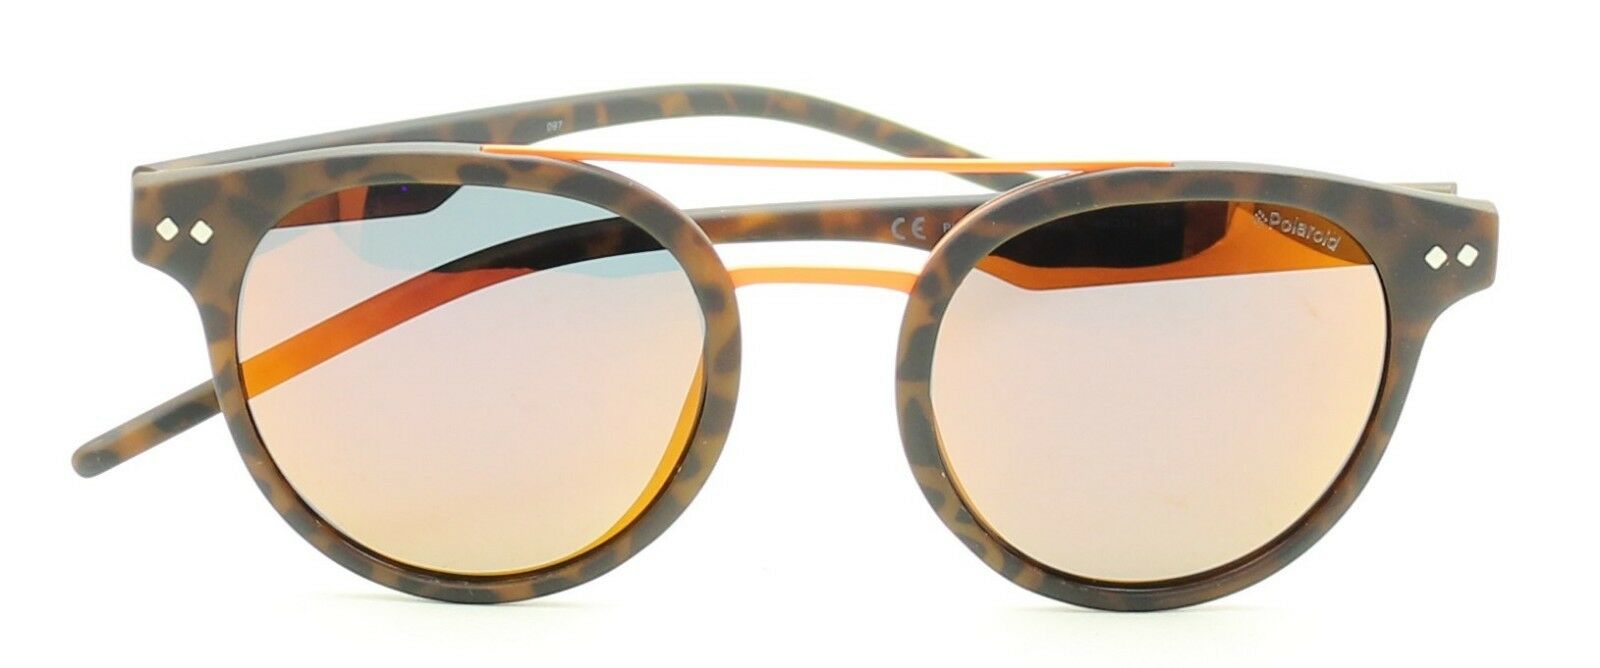 Bajio Sunglasses® Las Rocas Green Mirrored Glass With Matte Tortoise Frame